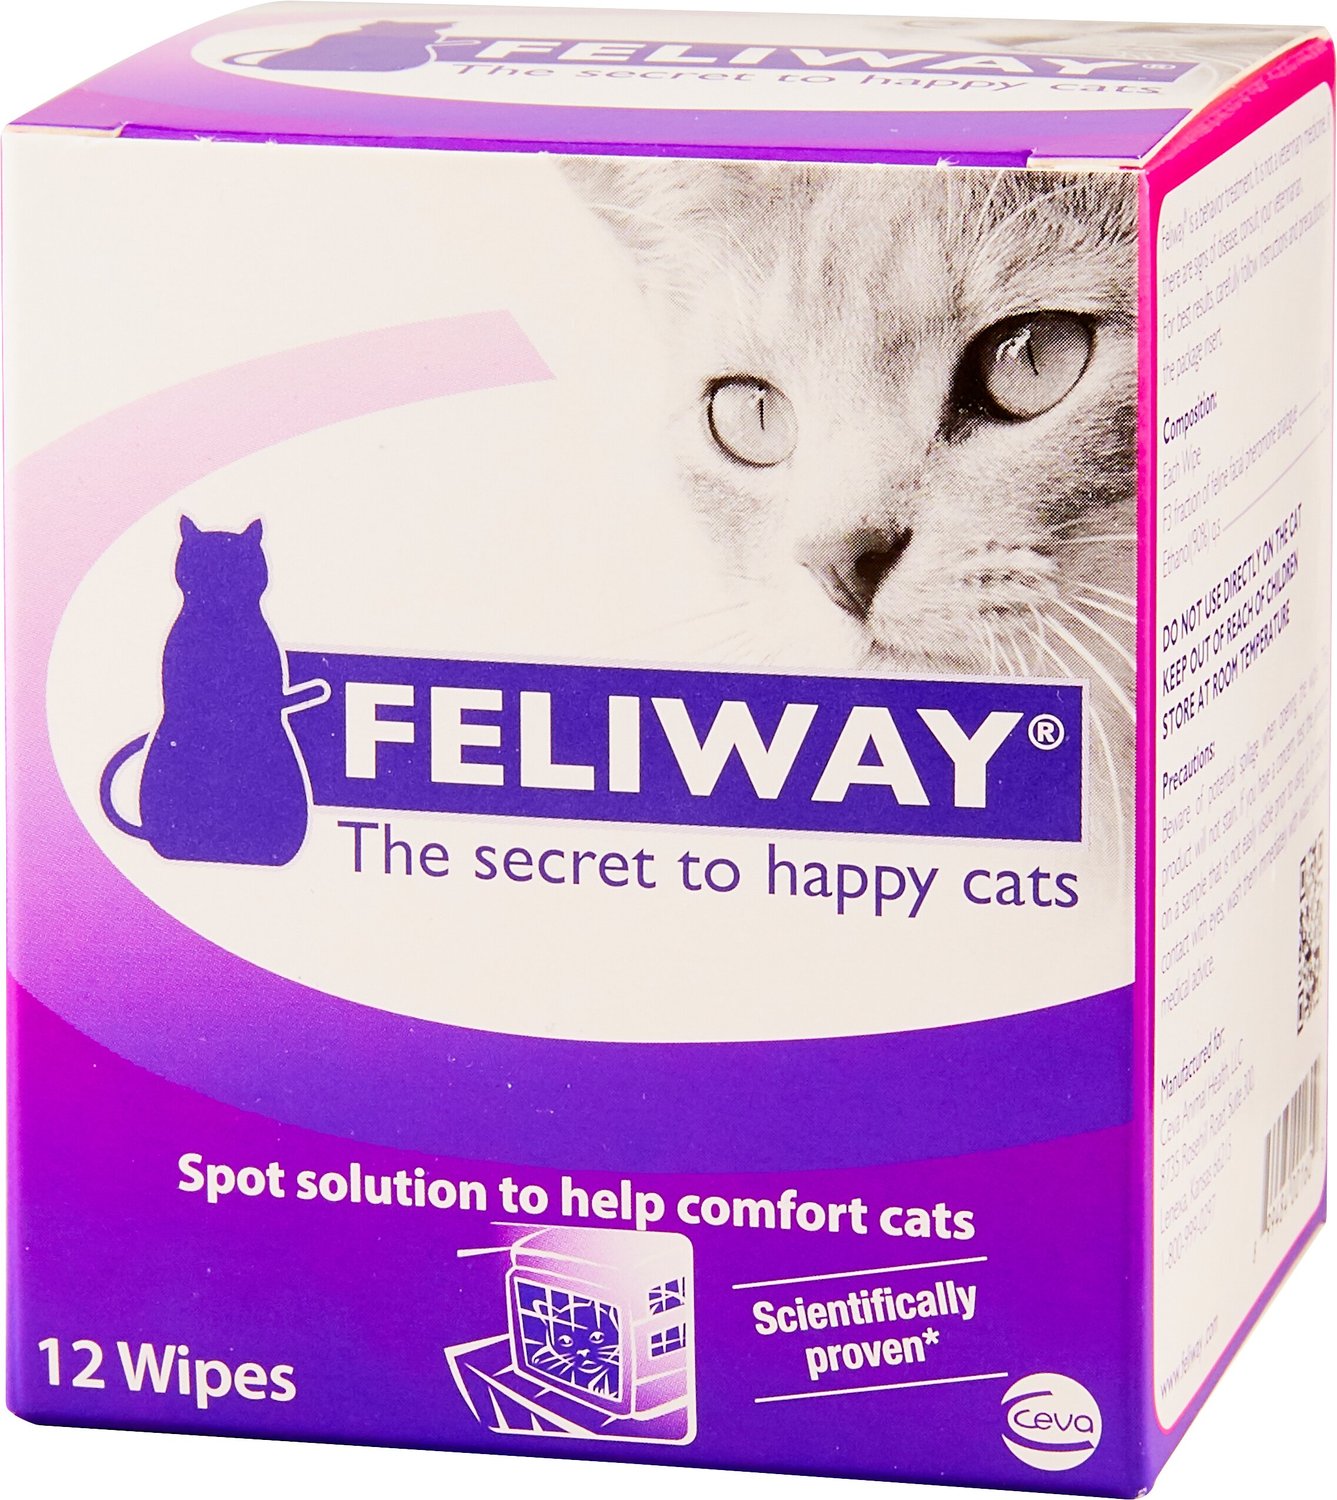 Feliway Calming Travel Cat Wipes, 12 count box